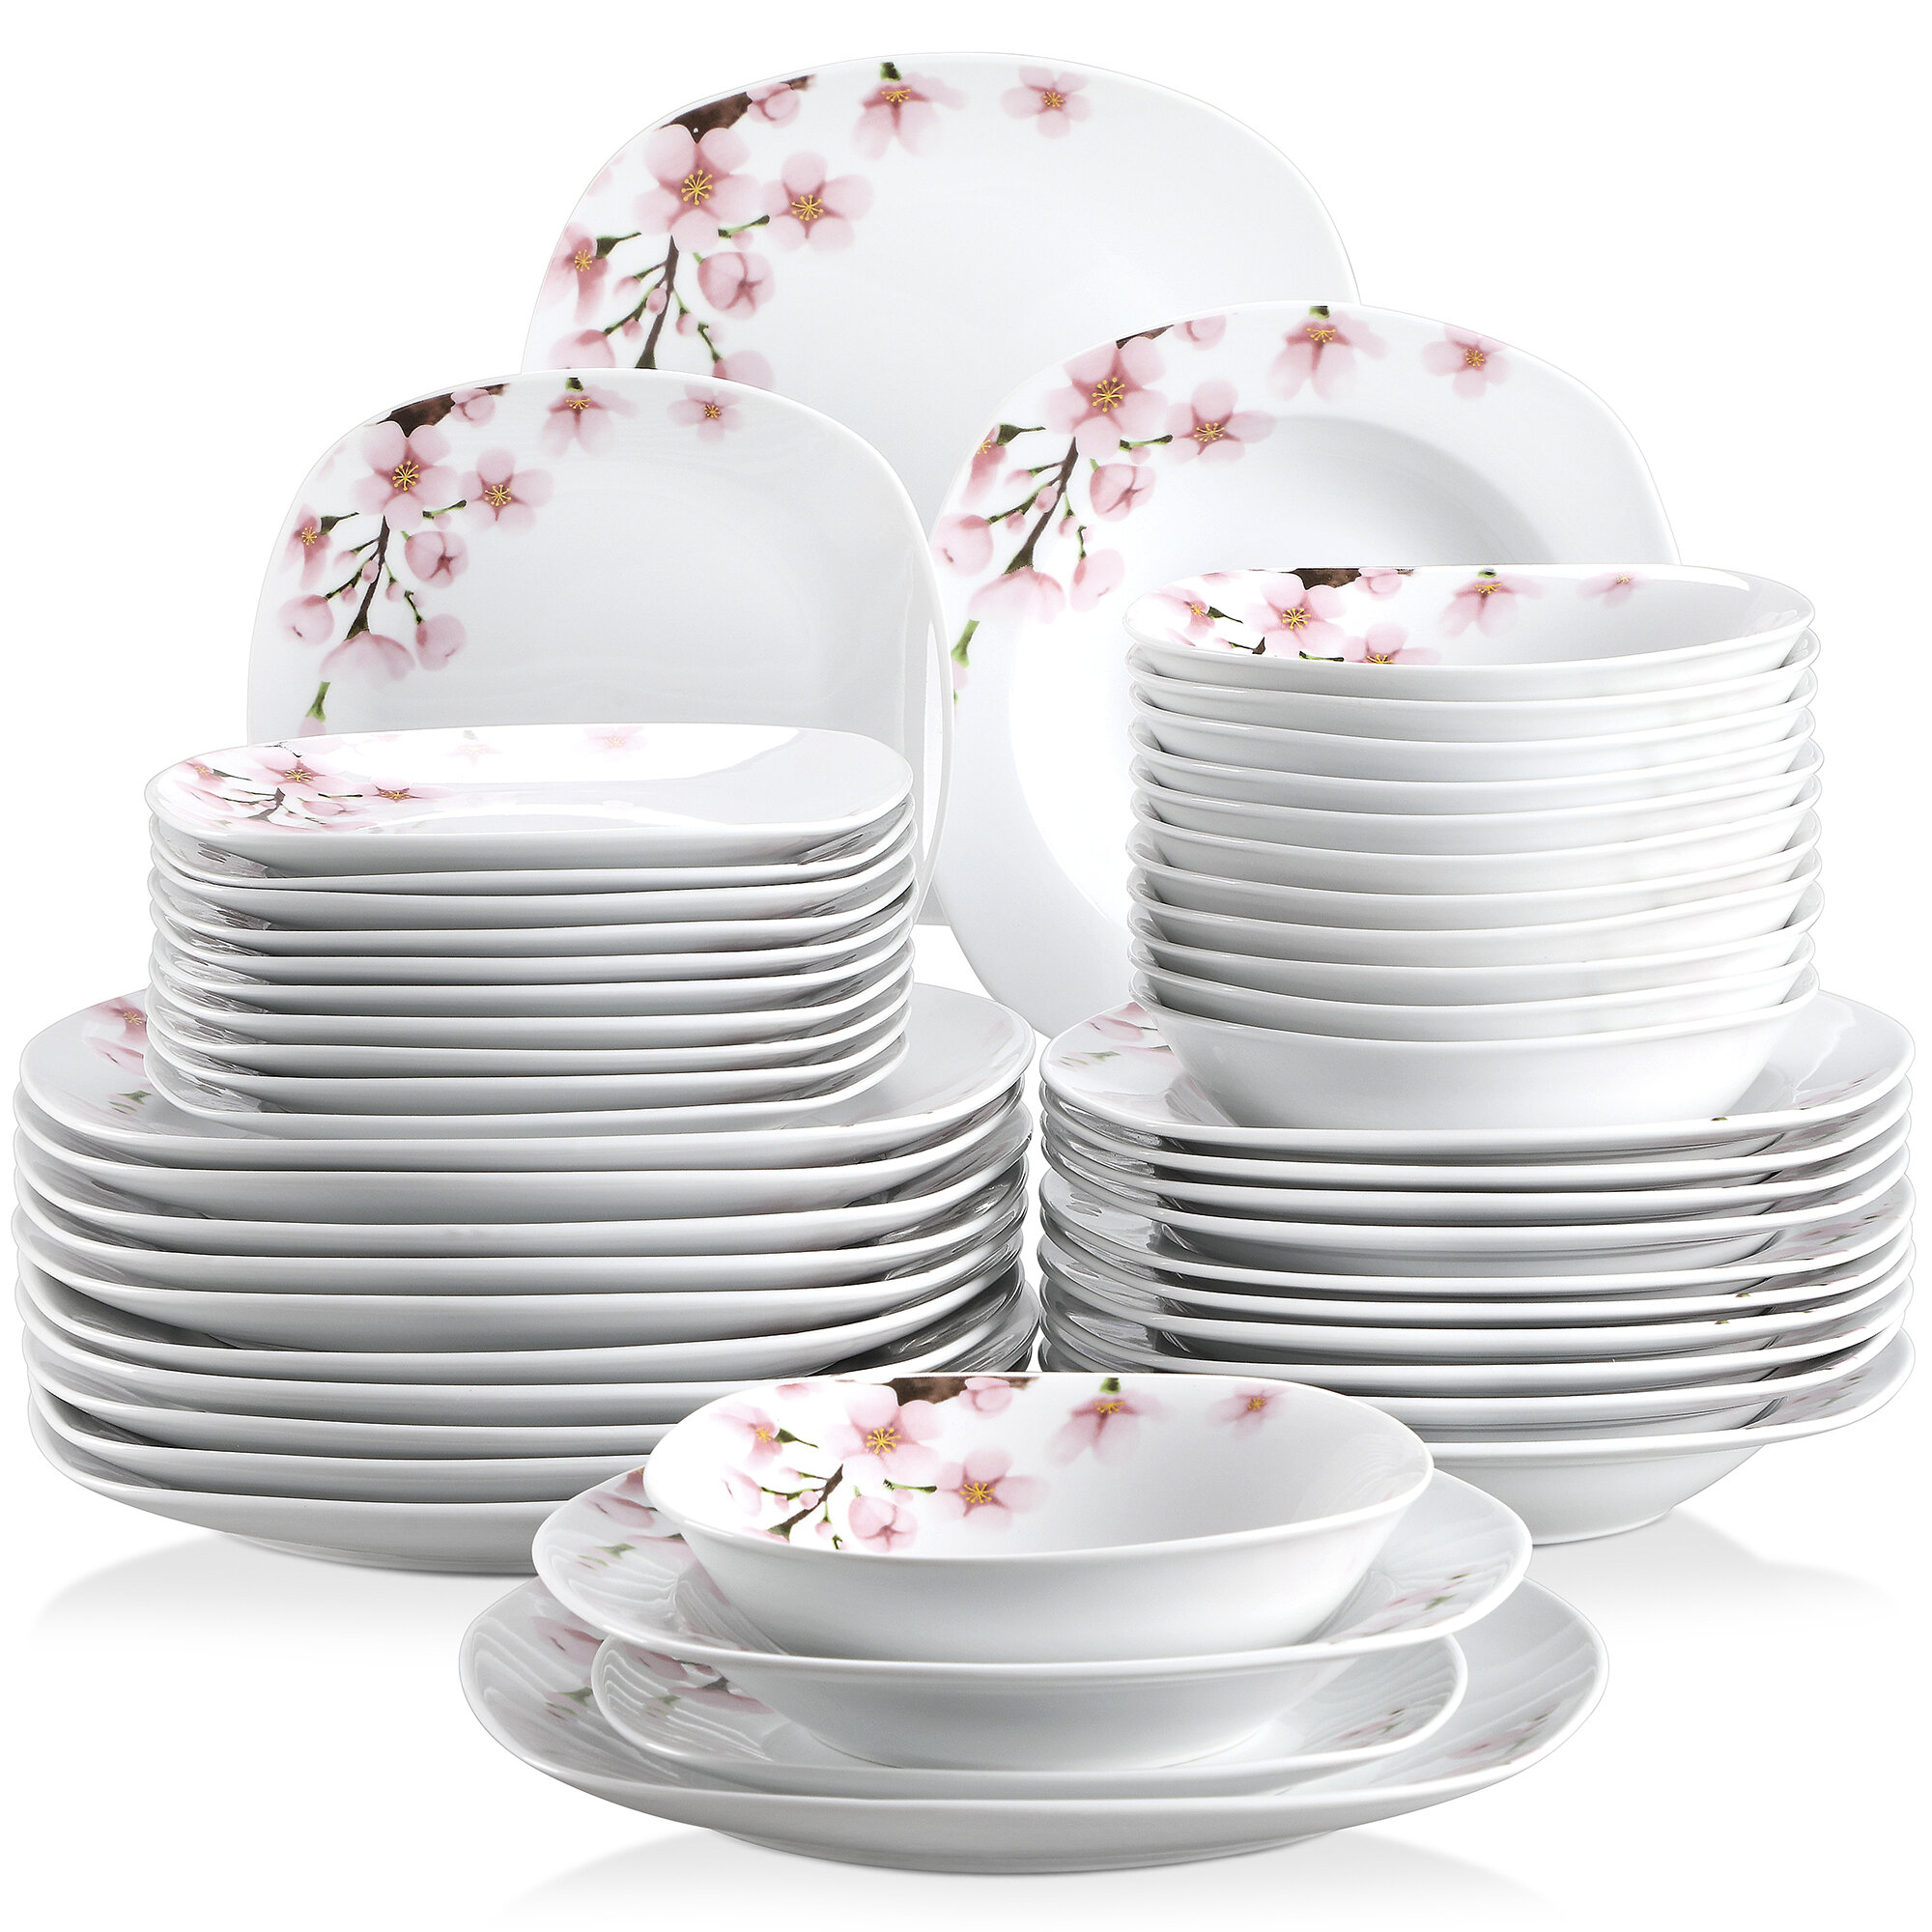 MALACASA 4-Piece White Porcelain Dinnerware in the Dinnerware department at